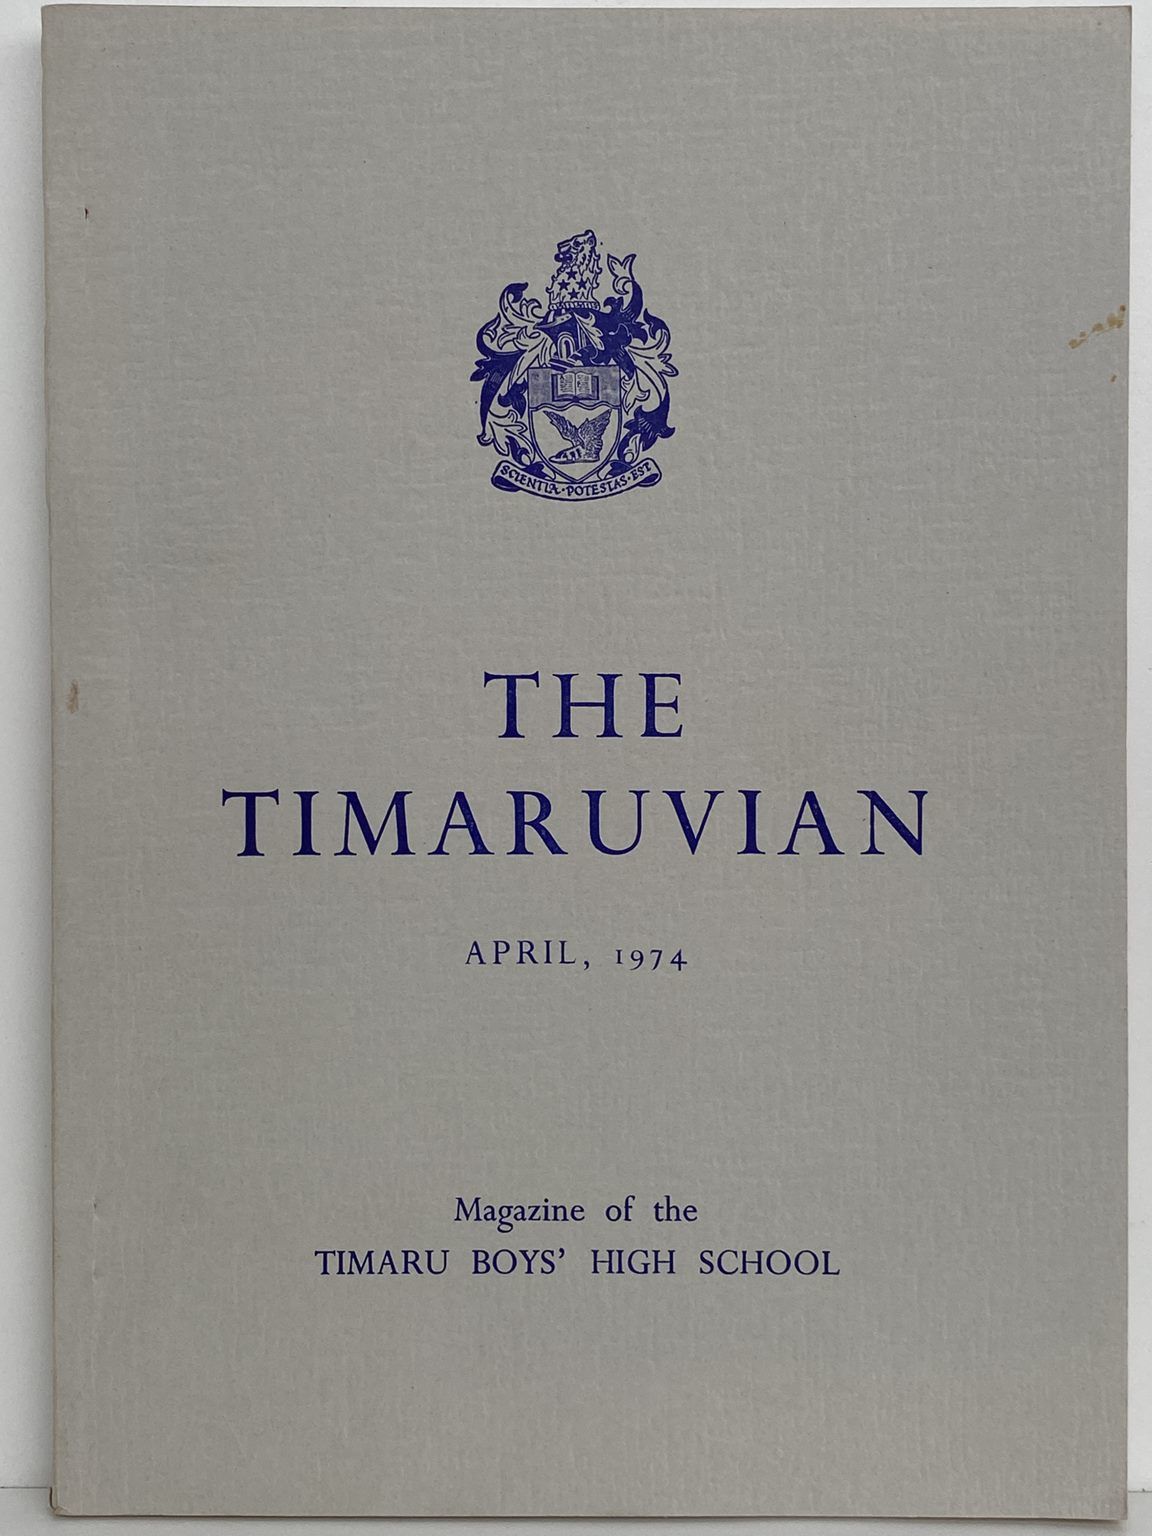 THE TIMARUVIAN: Magazine of the Timaru Boys' High School 1974